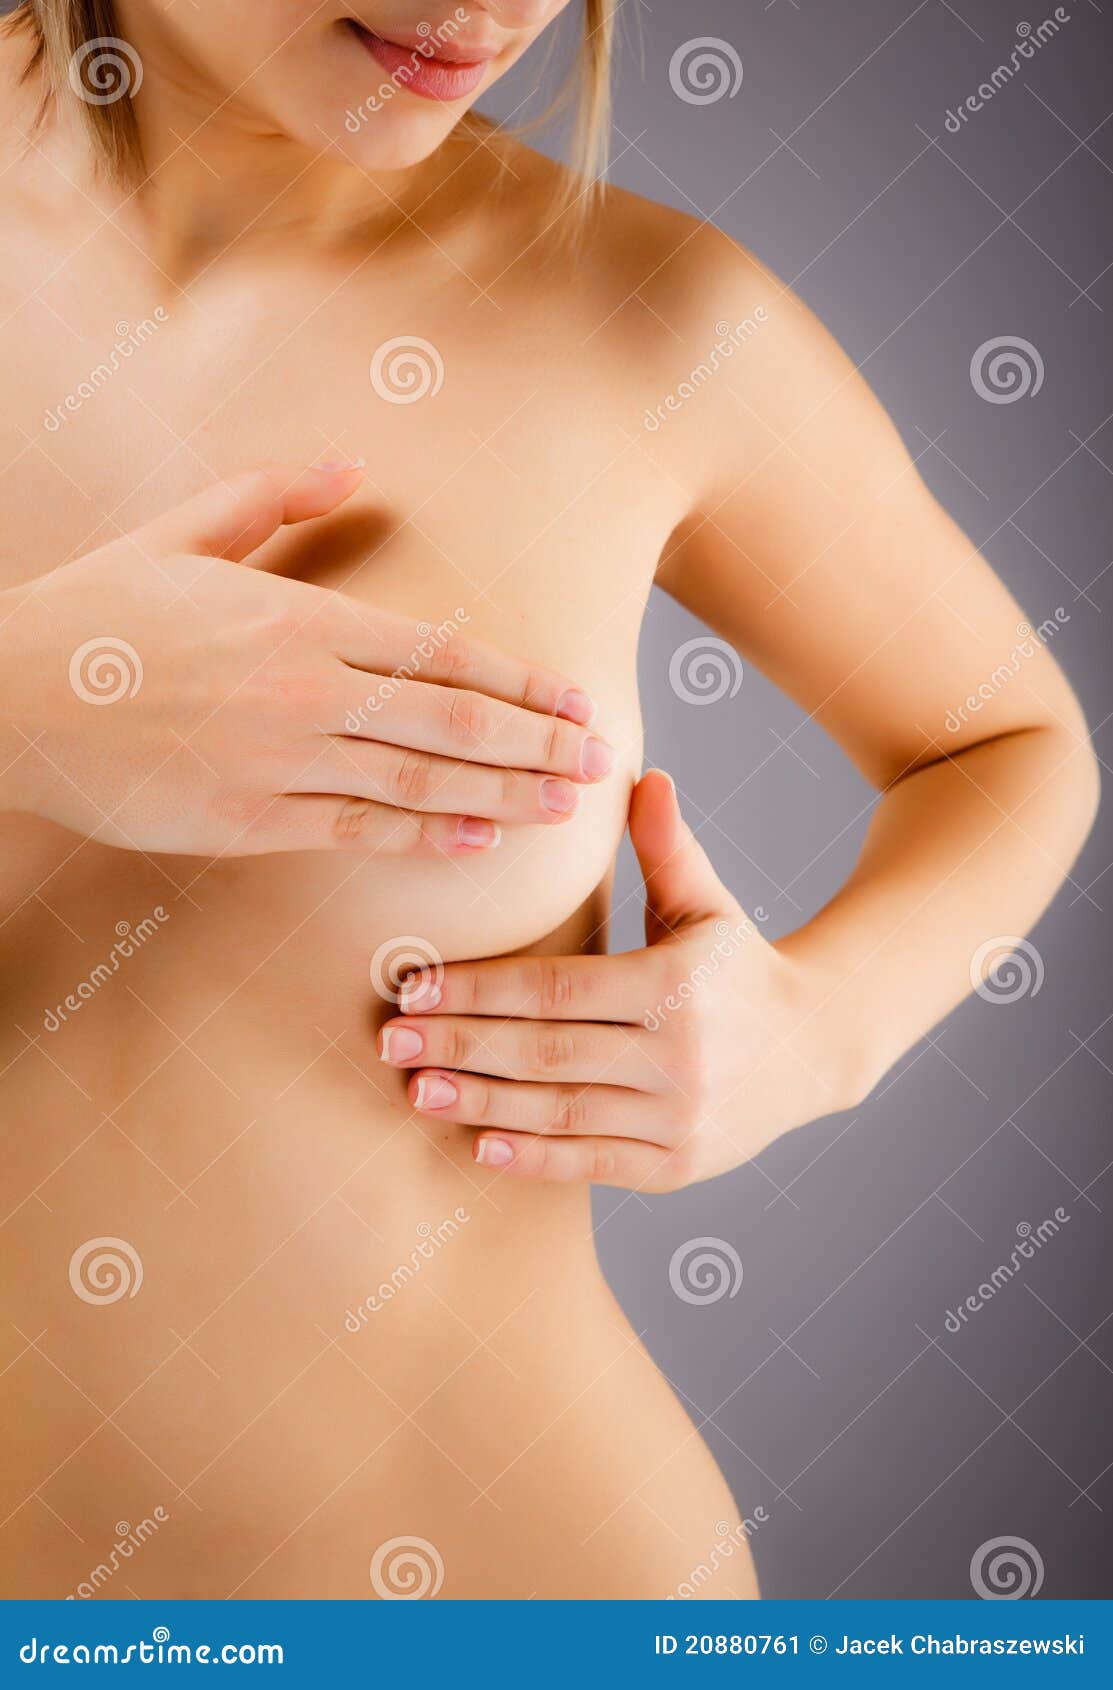 Women breast pics